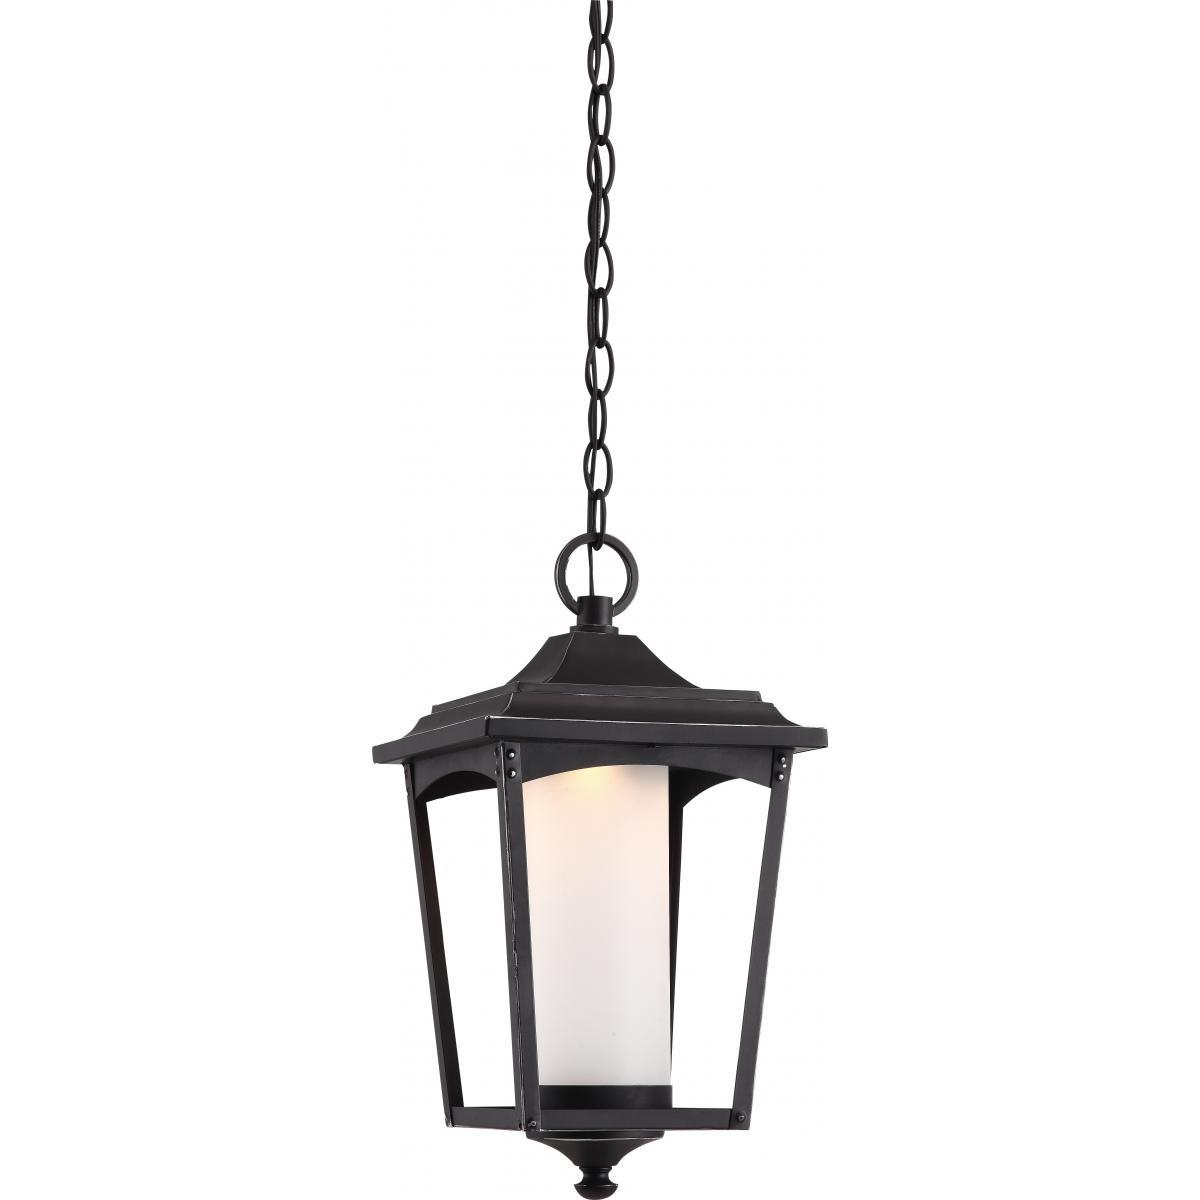 Essex Hanging Lantern Sterling Black Finish Outdoor Nuvo Lighting 